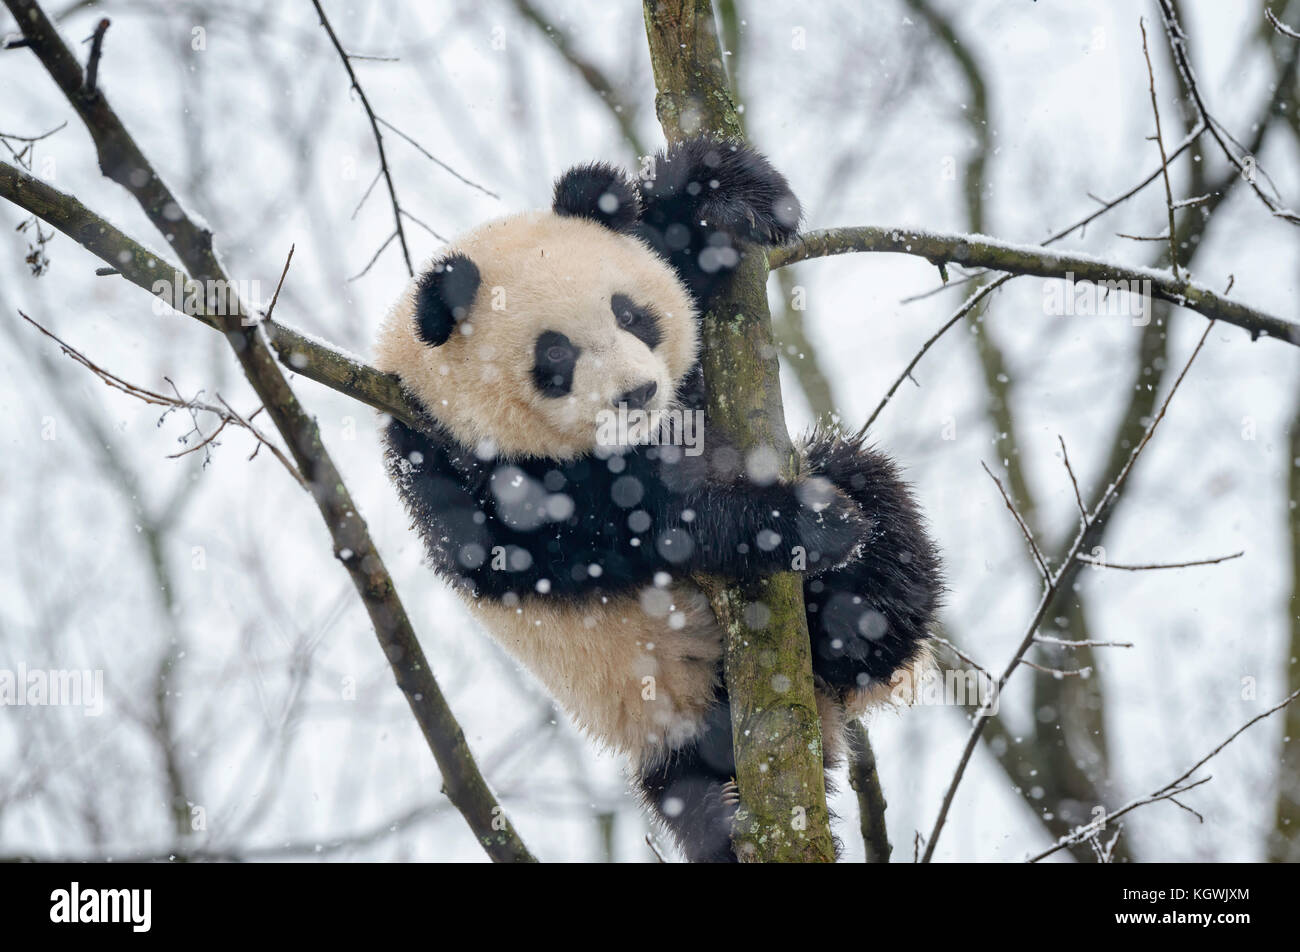 Giant Panda Cub In Tree In The Snow Stock Photo